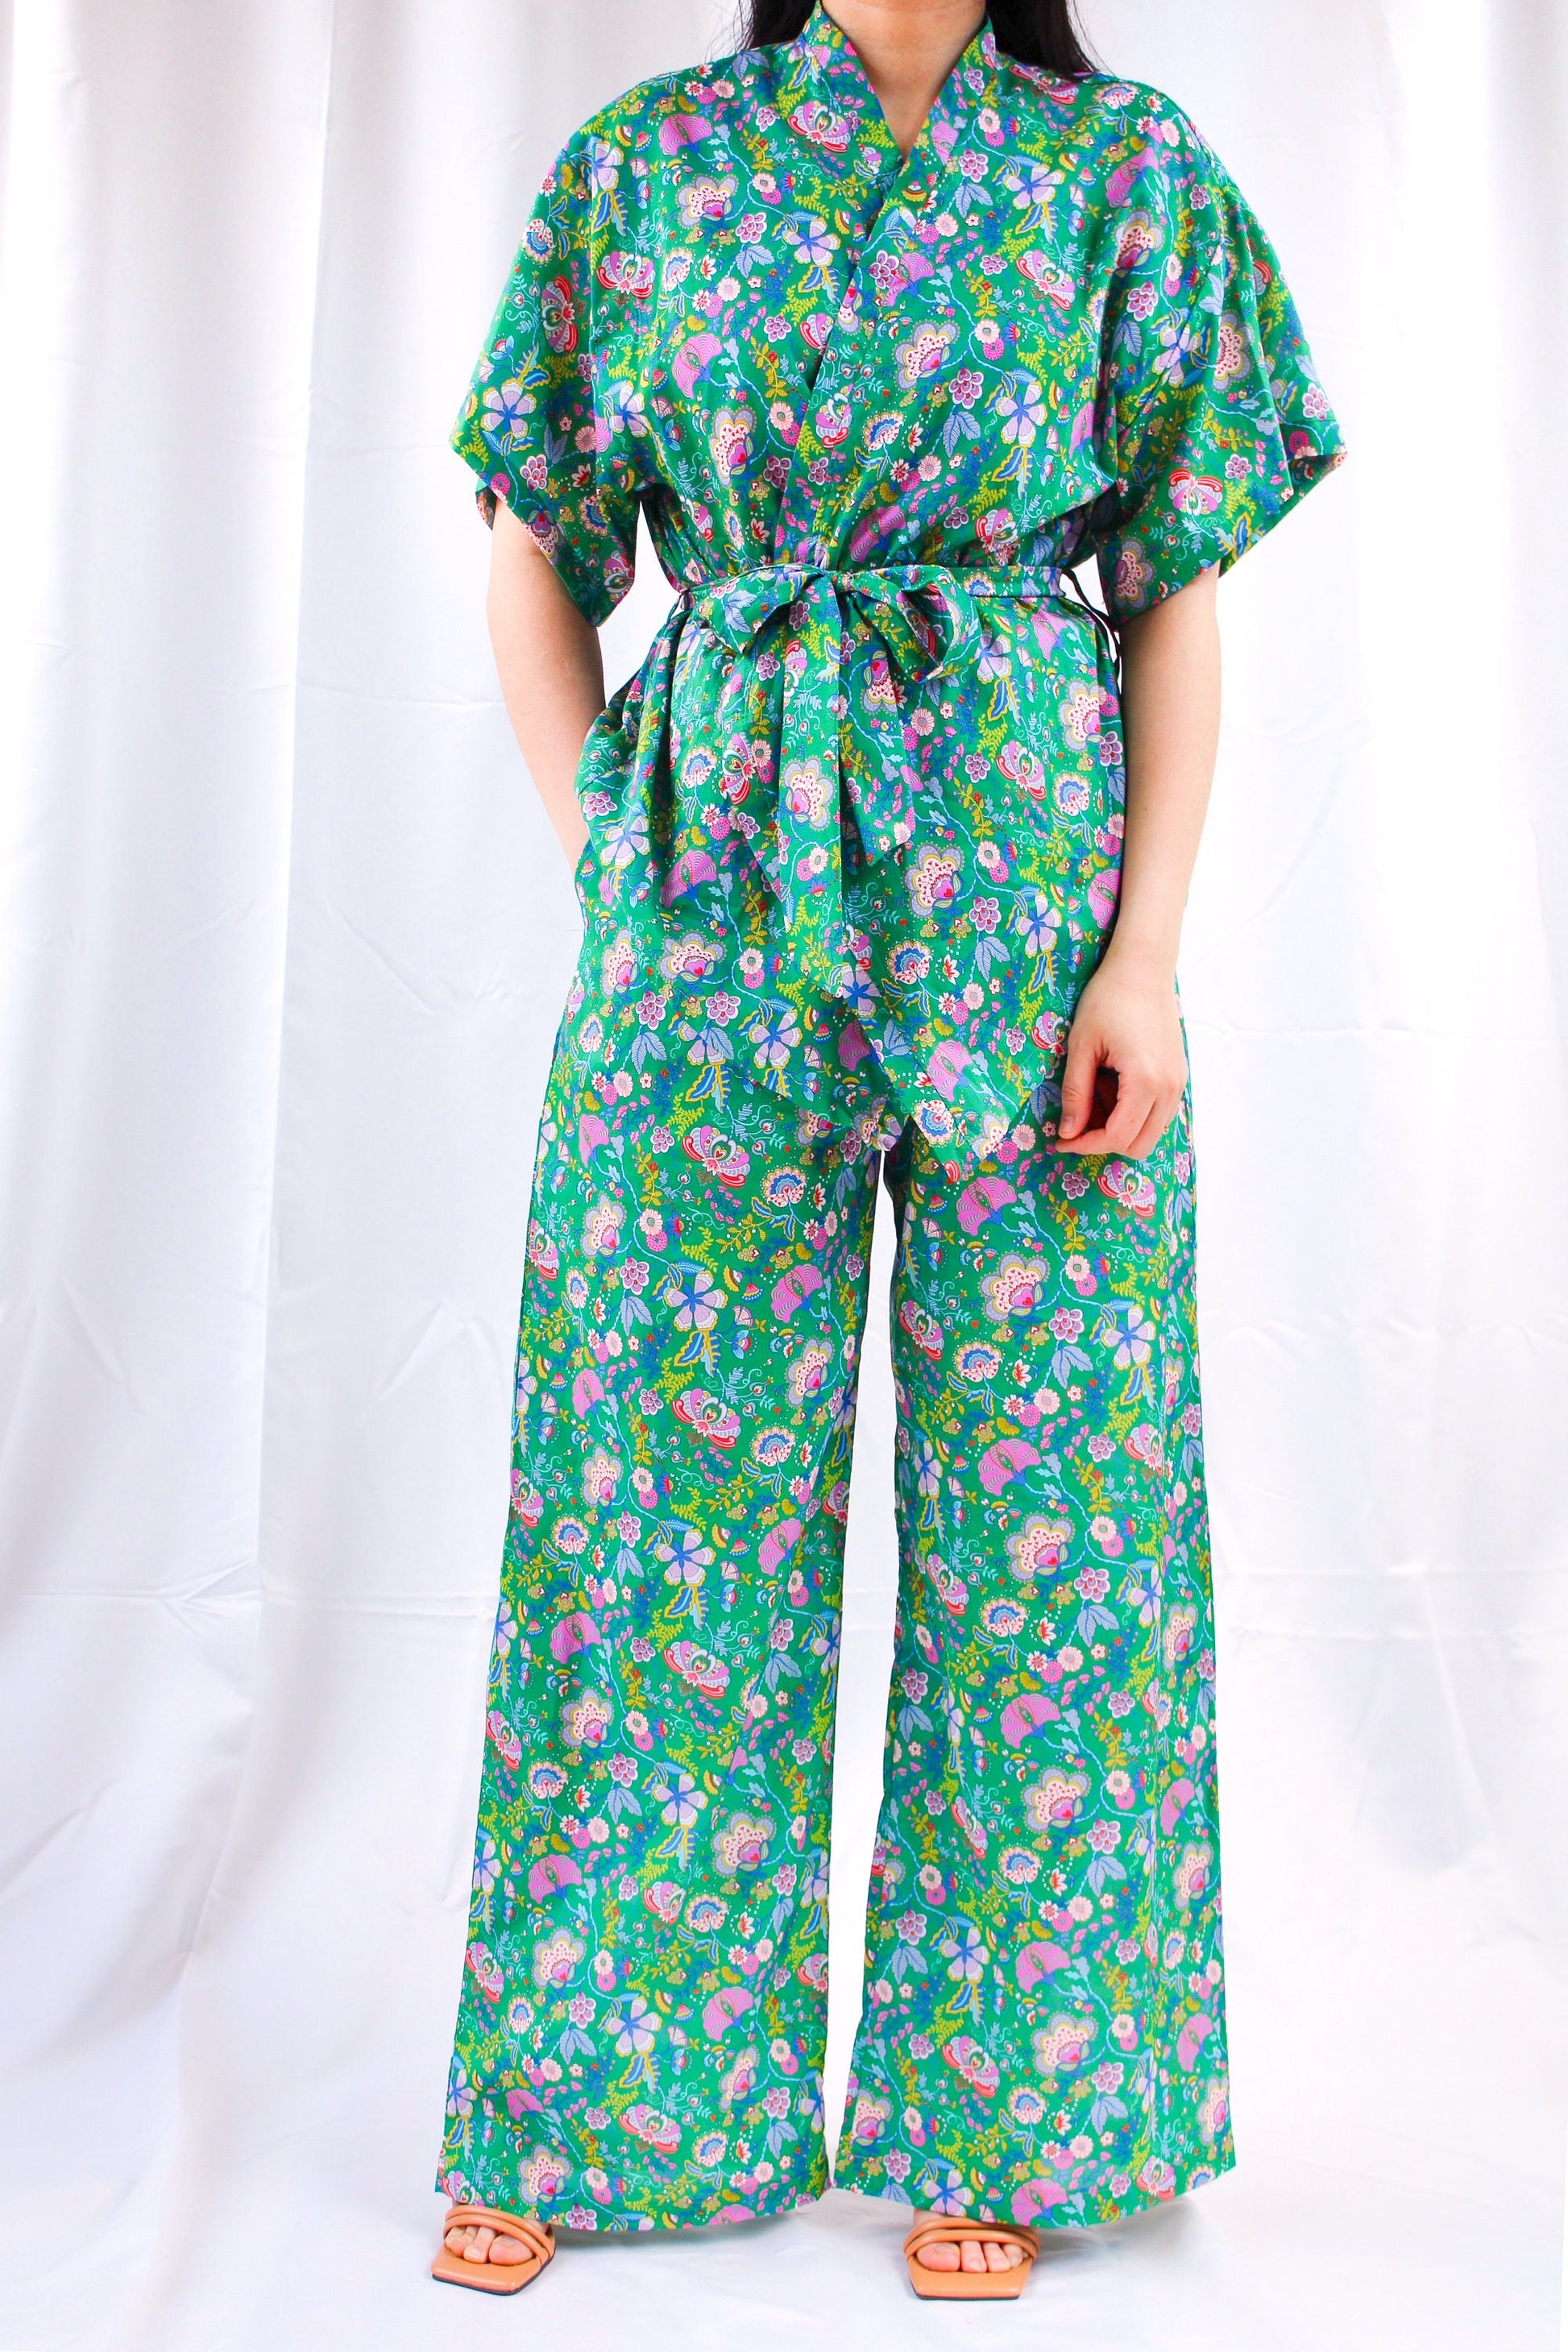 Kimono Top With Belt - Liberty London Cotton Blouse